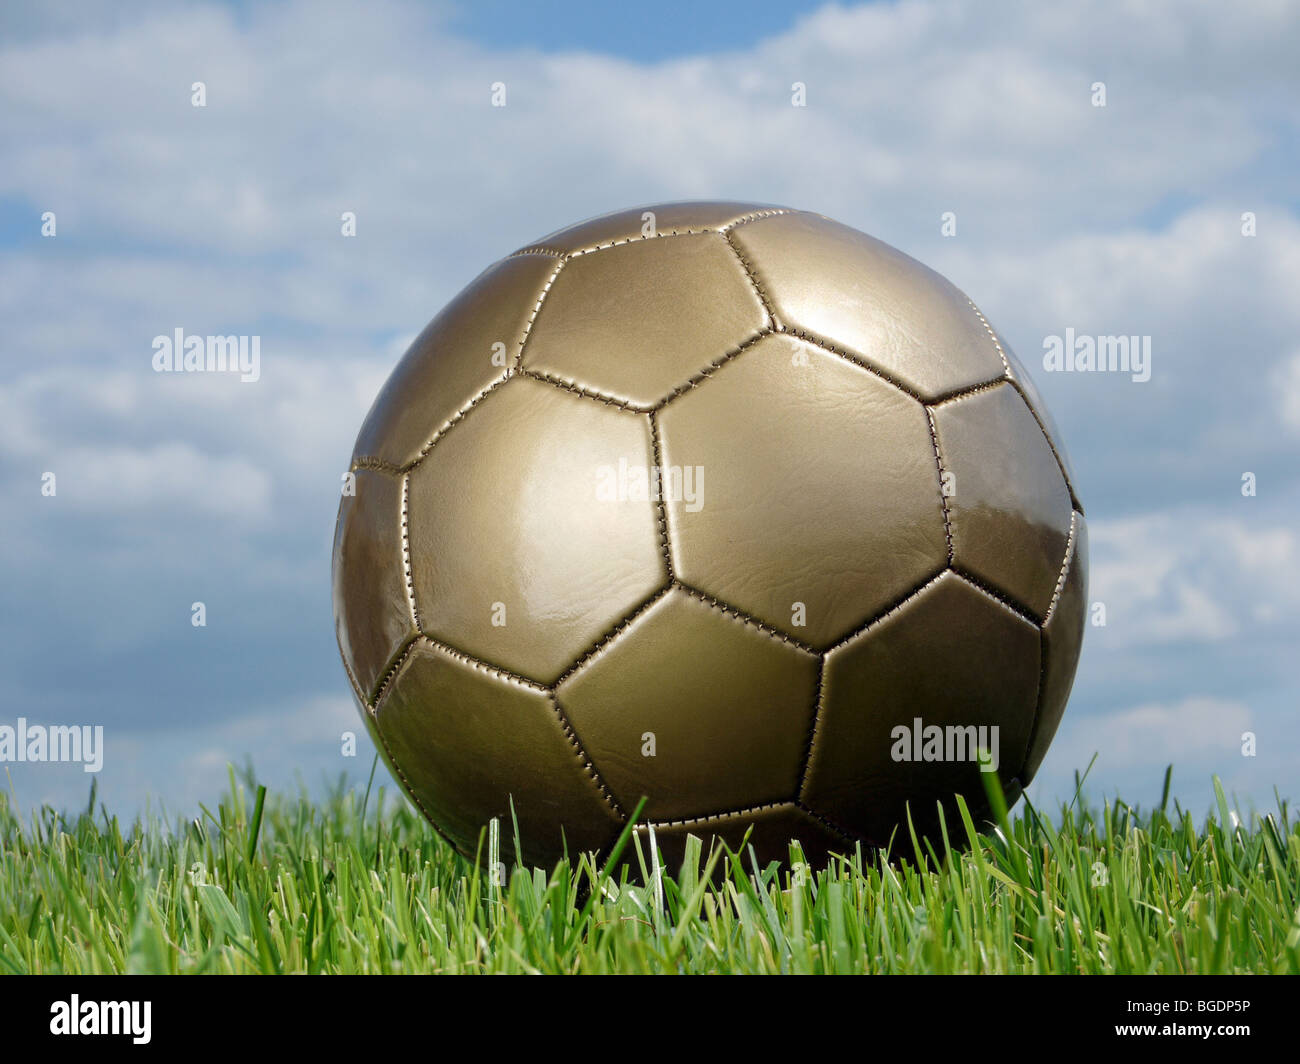 Goldenen Fußball auf dem Rasen gegen den Himmel geschossen Stockfoto